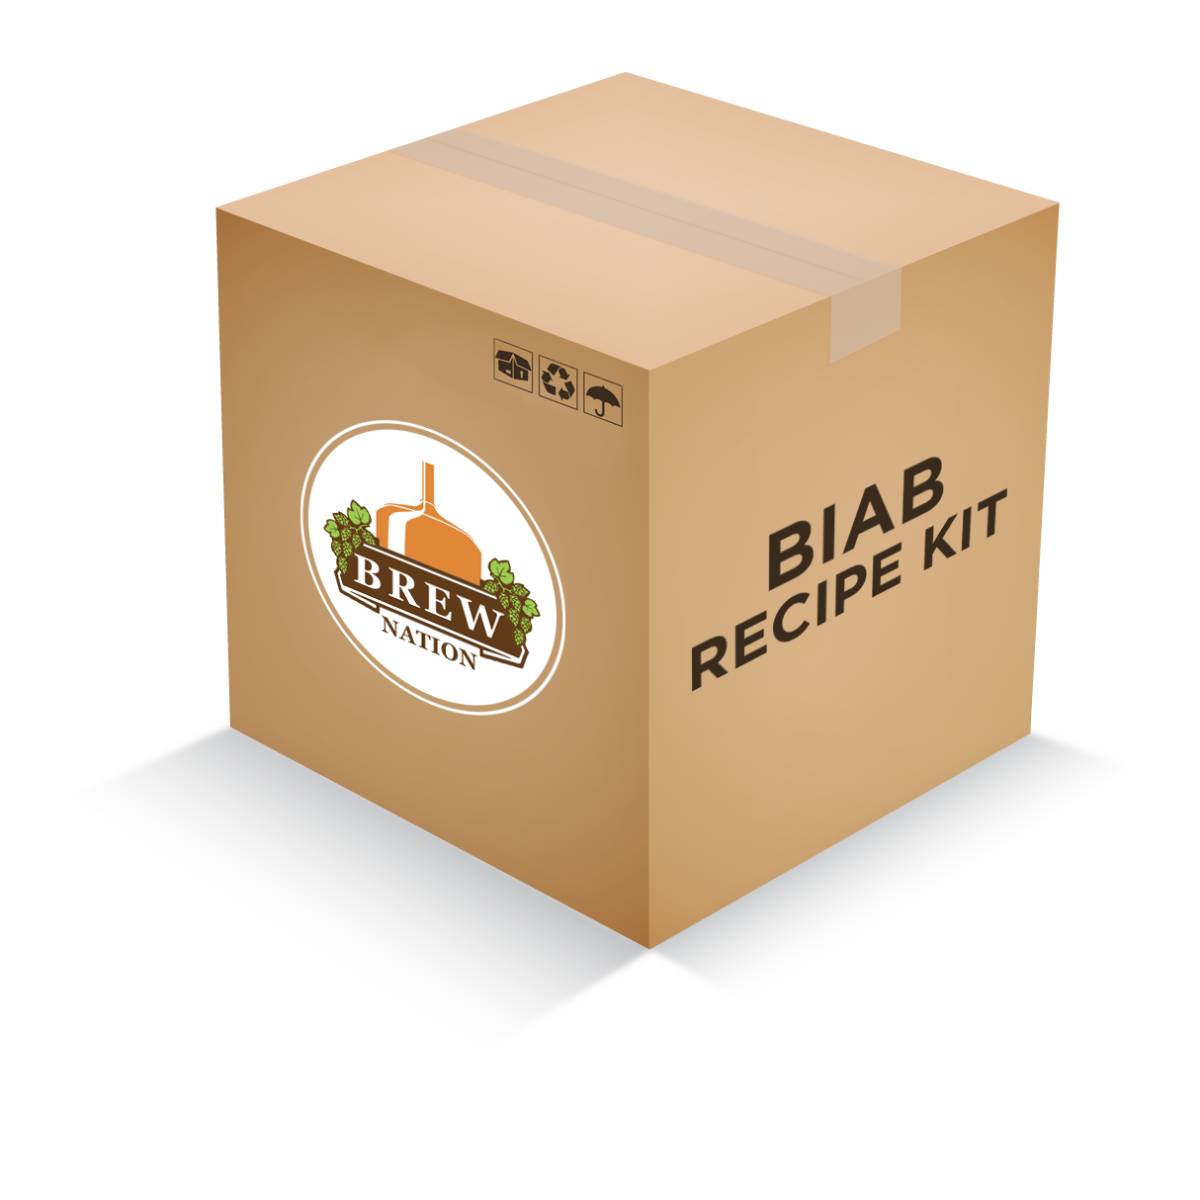 Irish Stout Recipe Kit (BIAB)